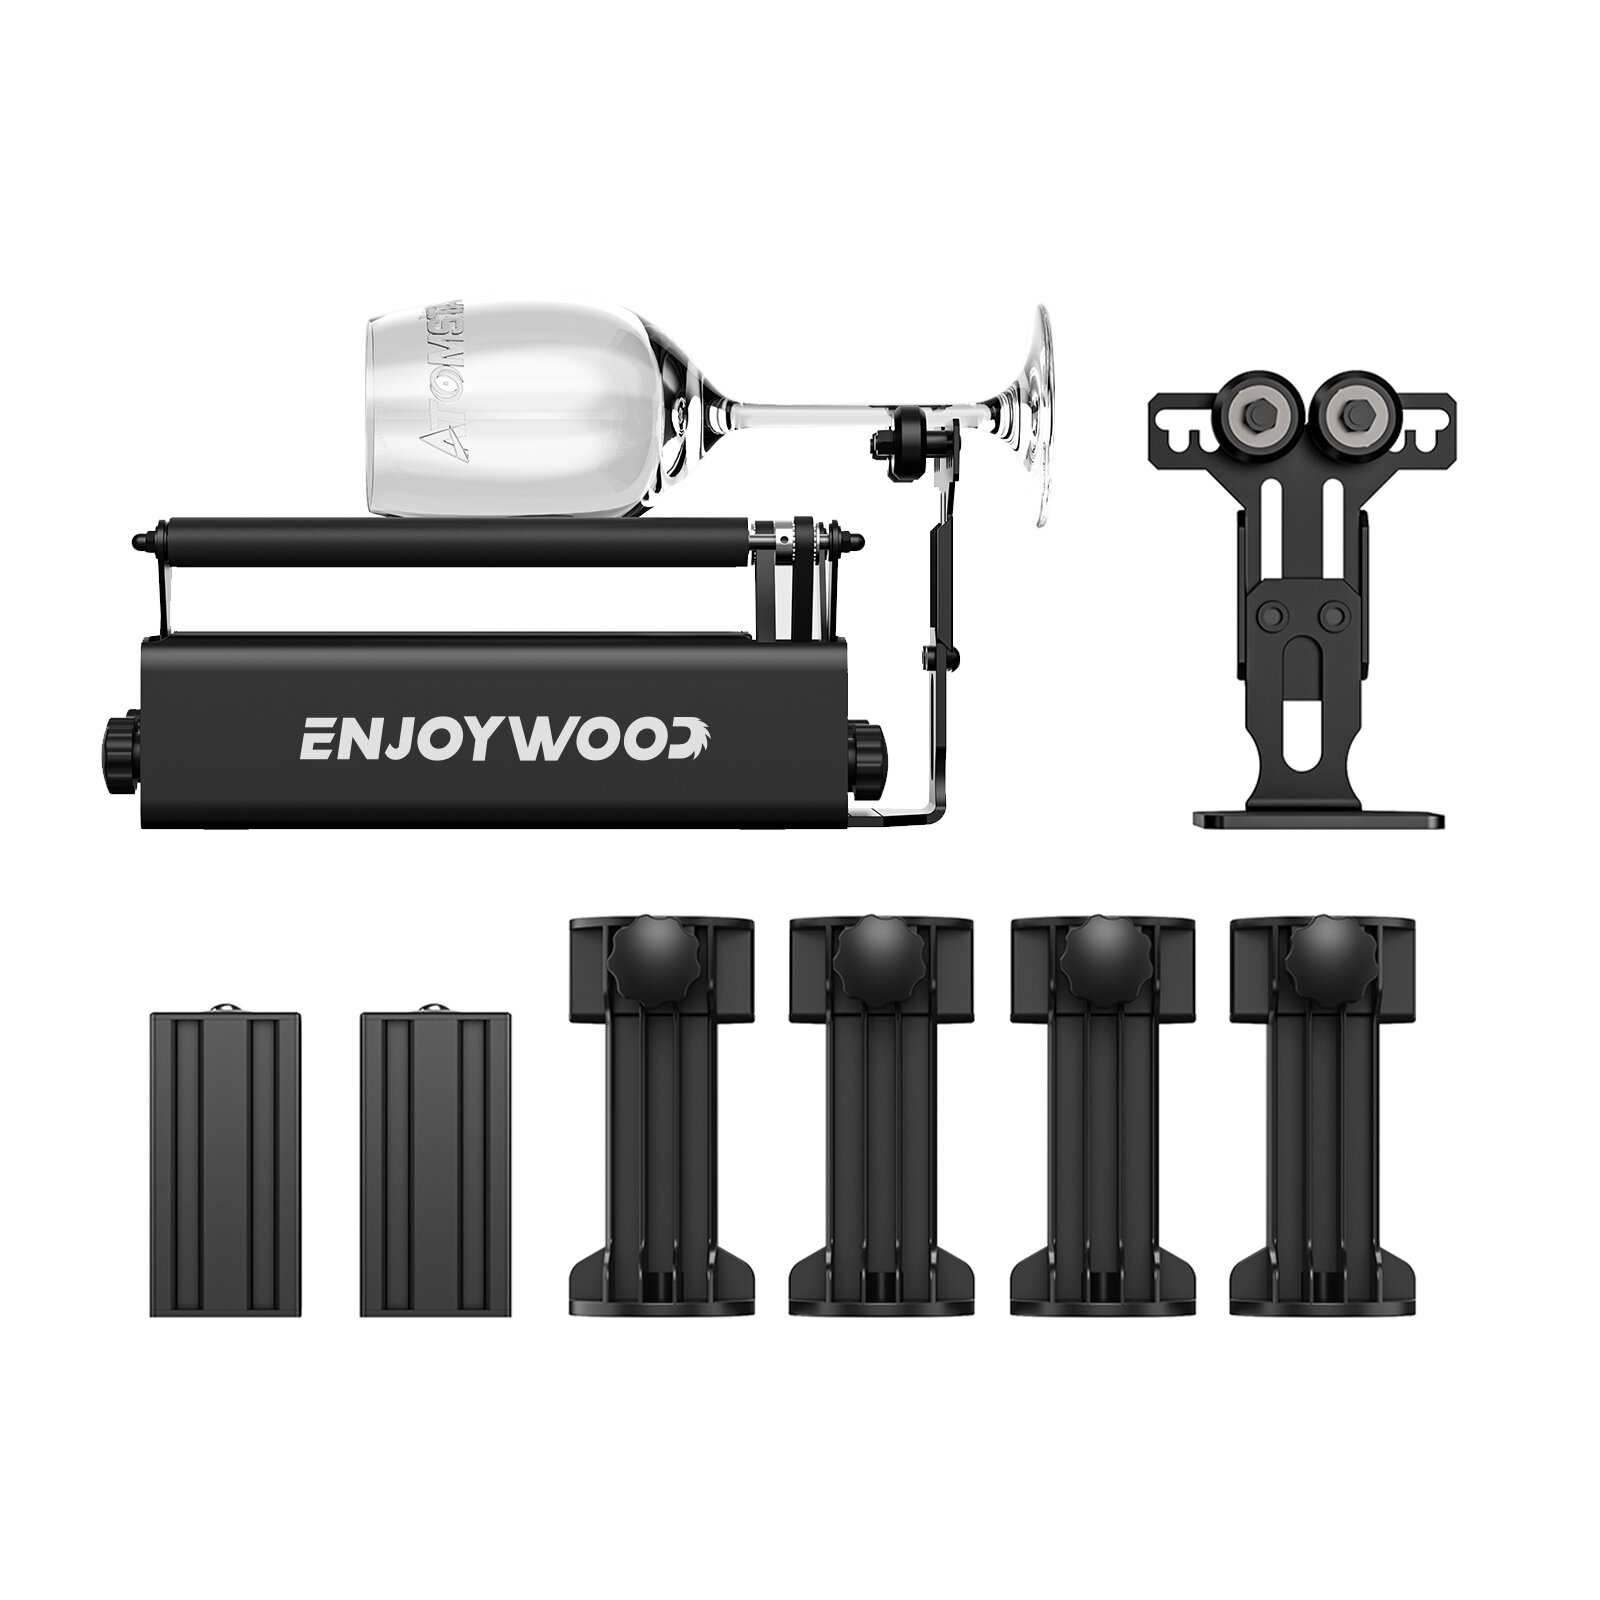 best price,enjoywood,r3,pro,rotary,roller,for,laser,engraver,eu,discount